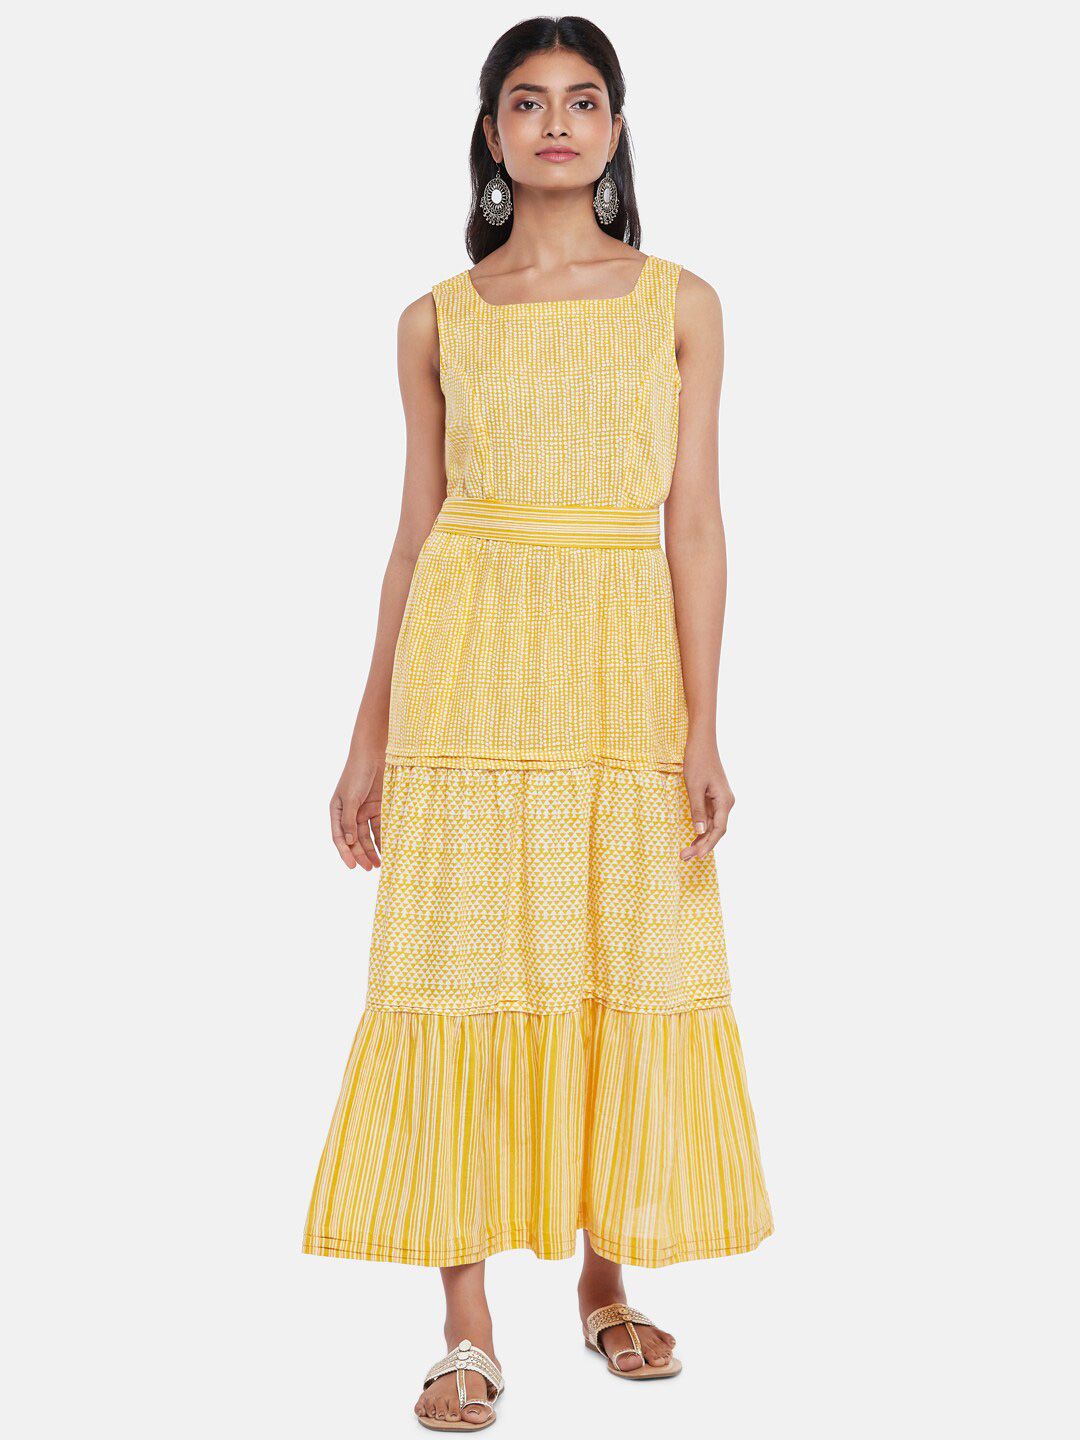 AKKRITI BY PANTALOONS Mustard Yellow Maxi Dress Price in India